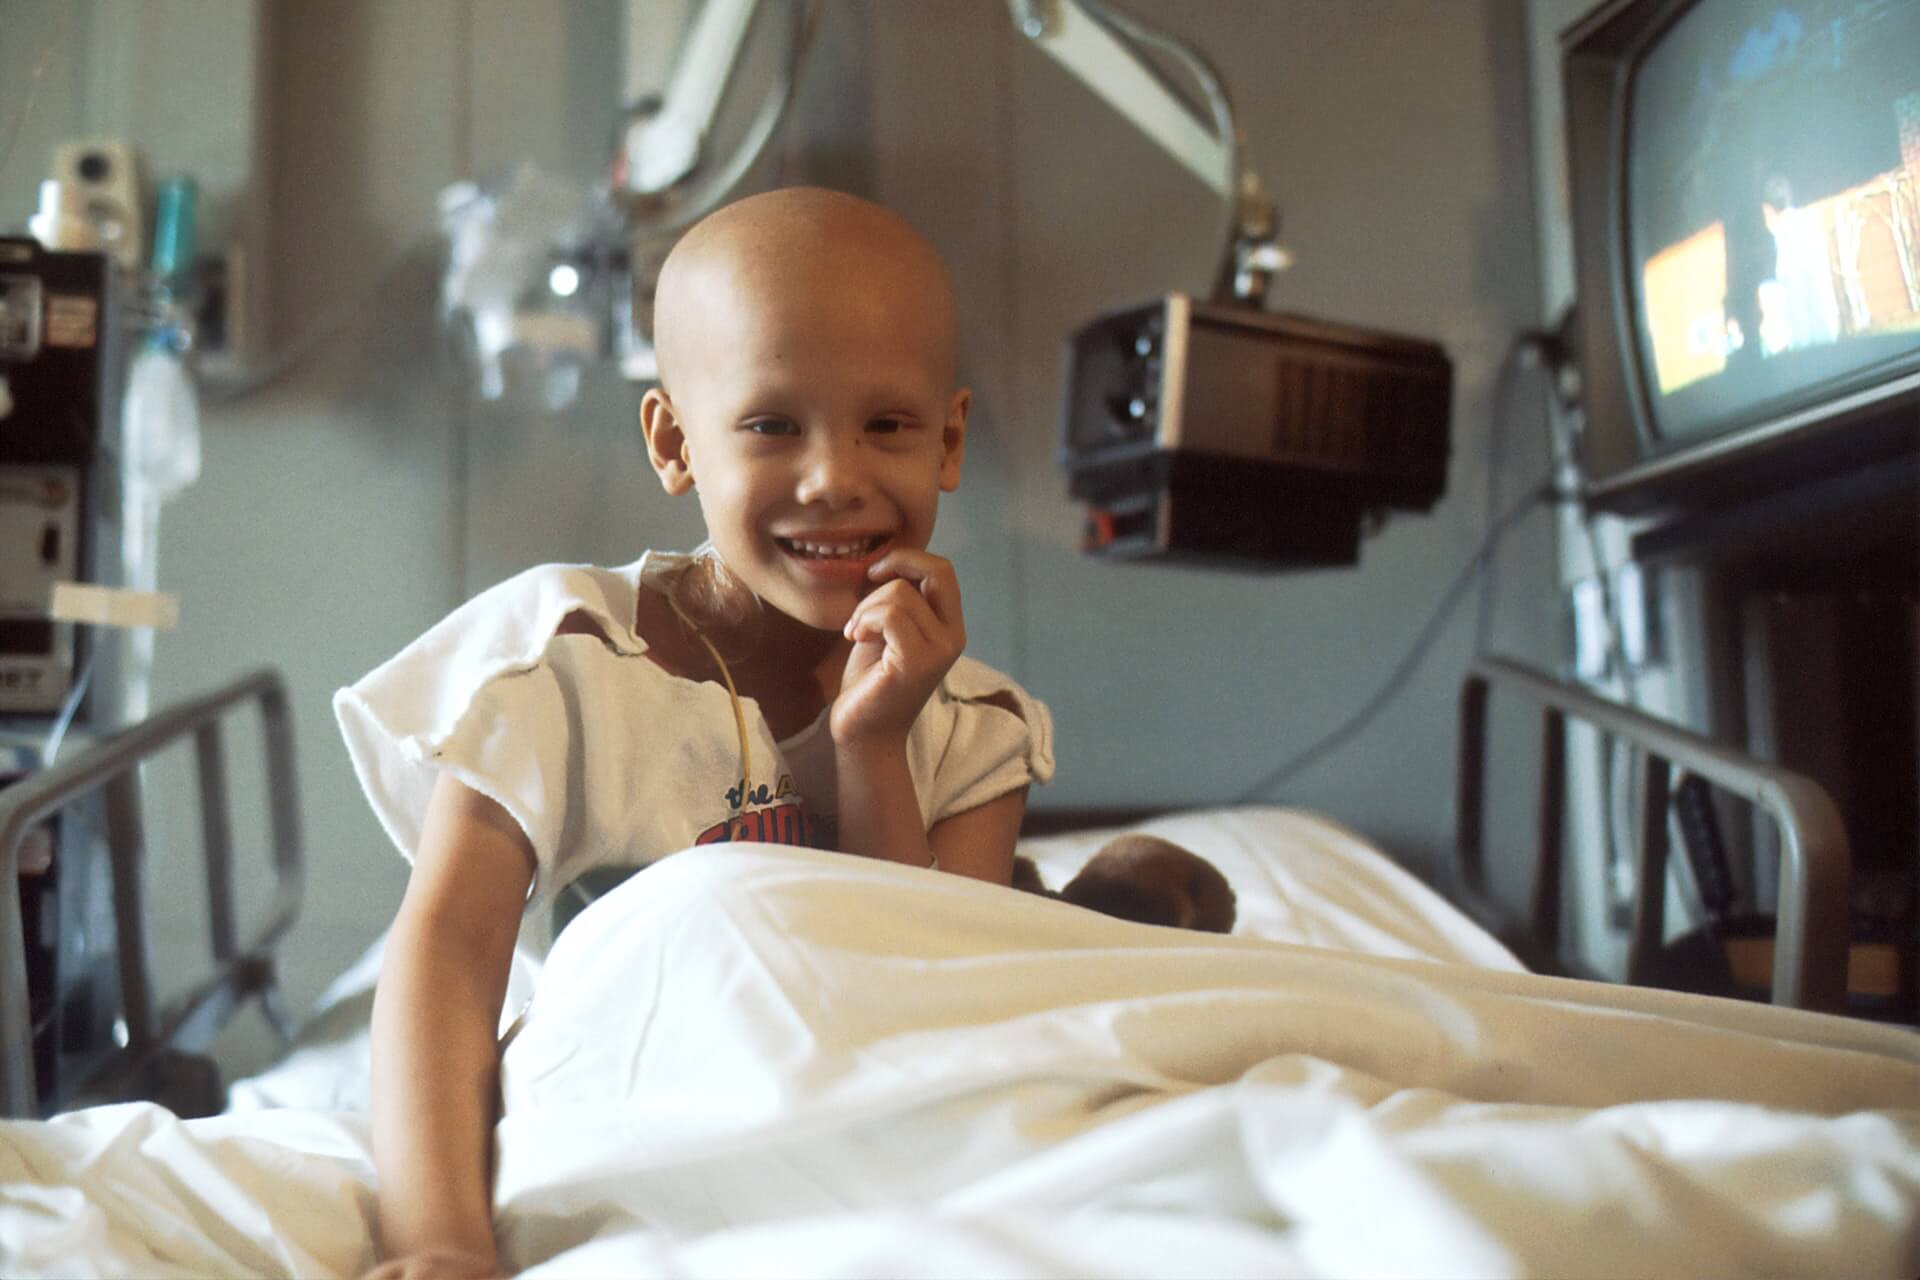 Raise money for pediatric cancer